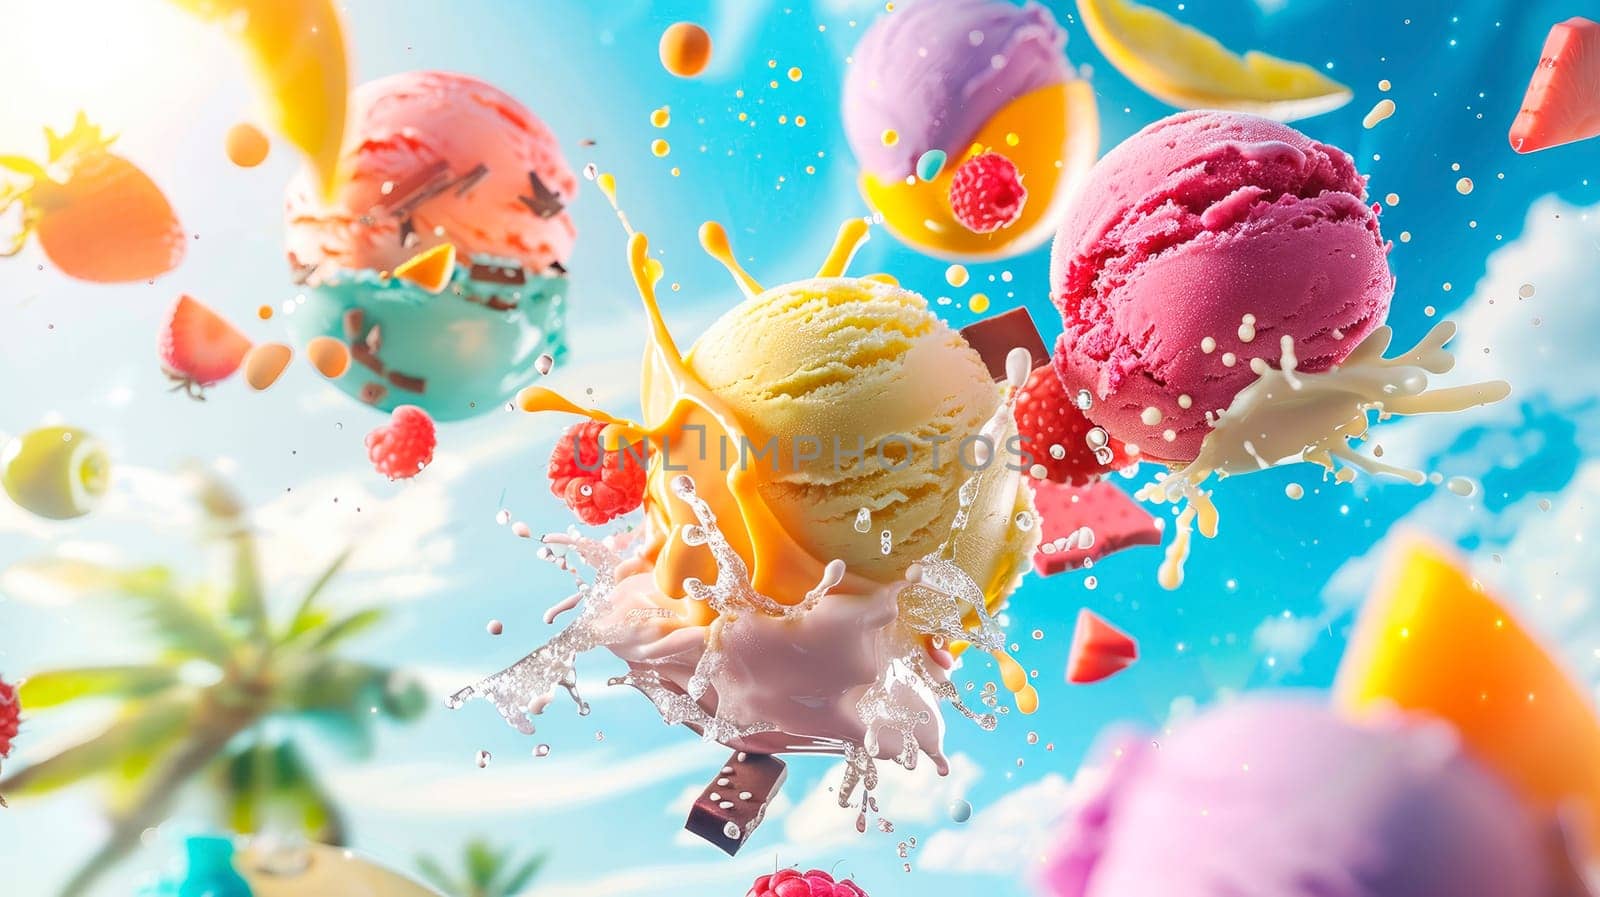 ice cream balls with berries and fruit splash. selective focus. by yanadjana